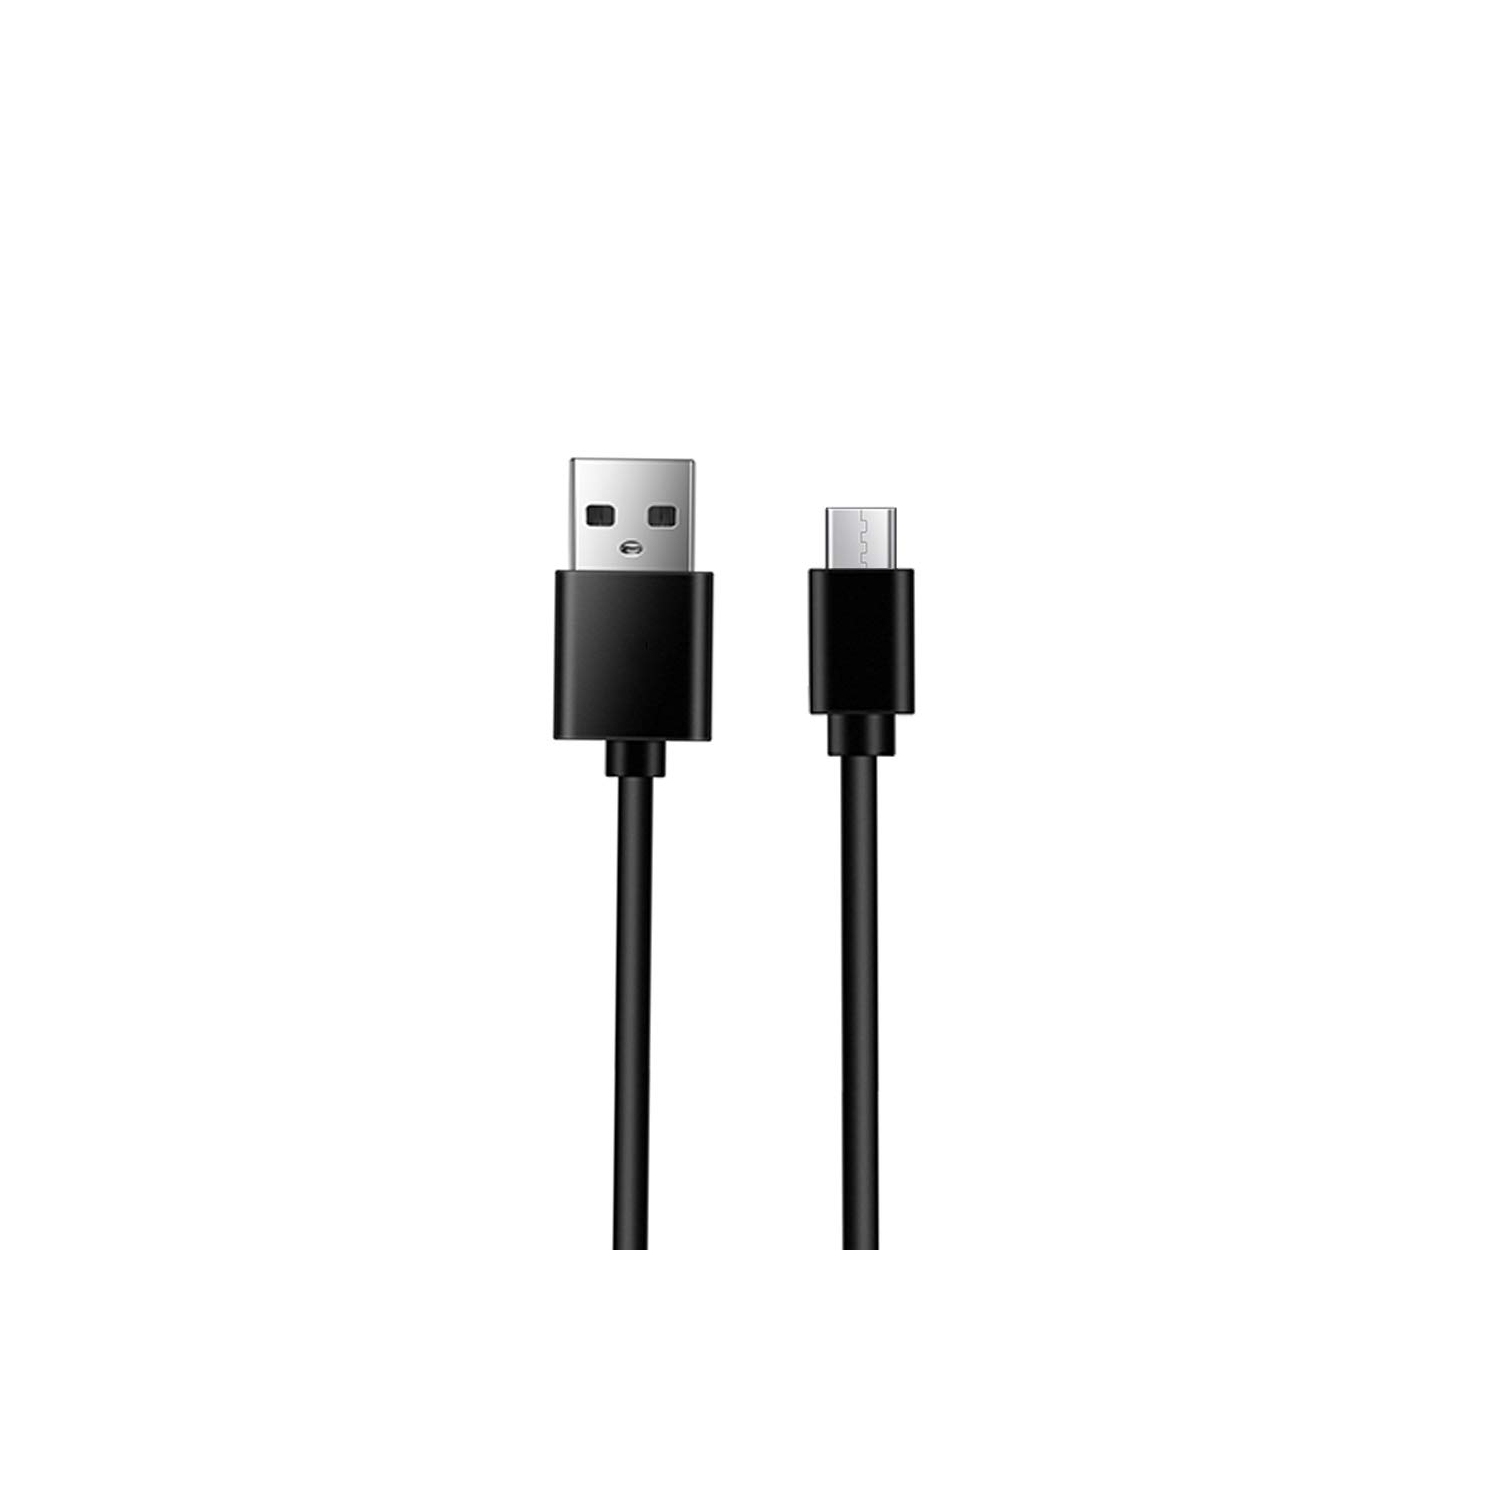 USB Type C Charging Cable Compatible with JBL Charge 4, JBL Pulse 4, JBL Flip 5, JRPOP Speaker, Endurance Peak Wireless